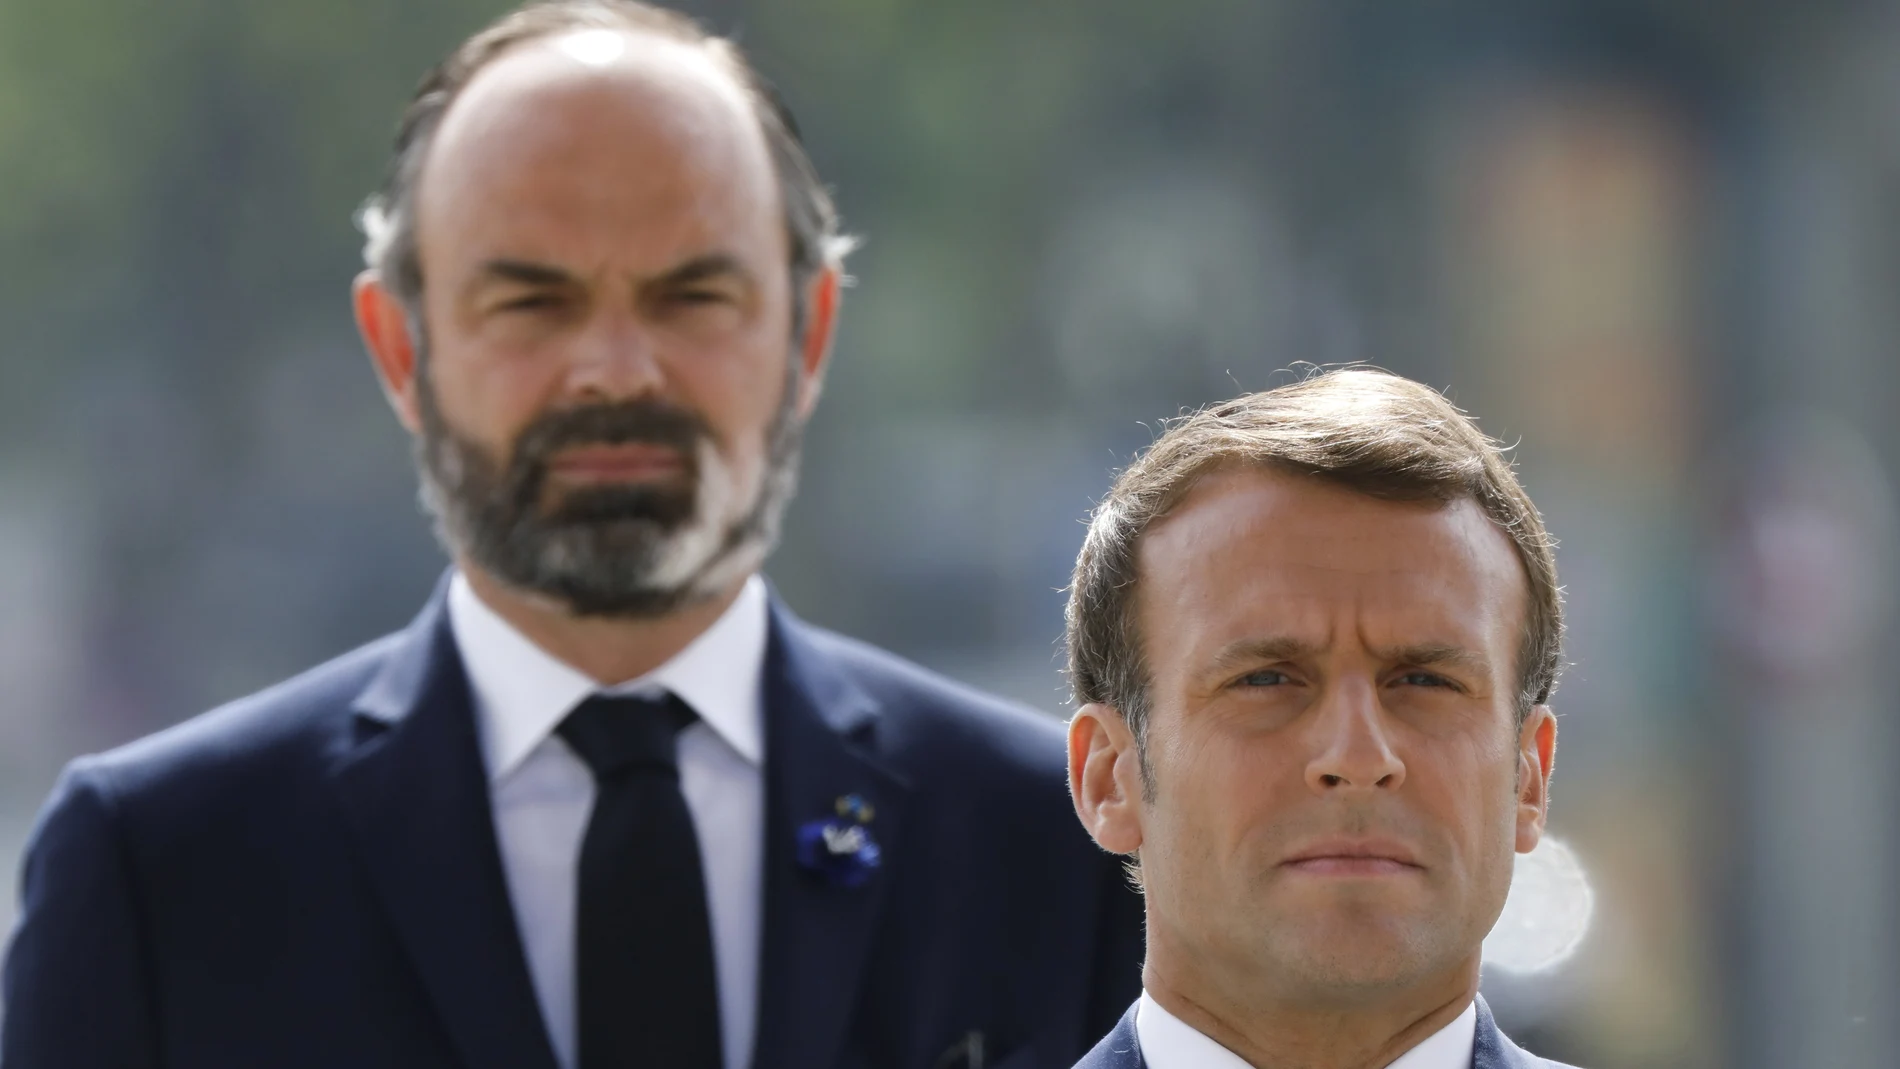 El primer ministro francés, Edouard Philippe, en un segundo plano por detrás del presidente Macron